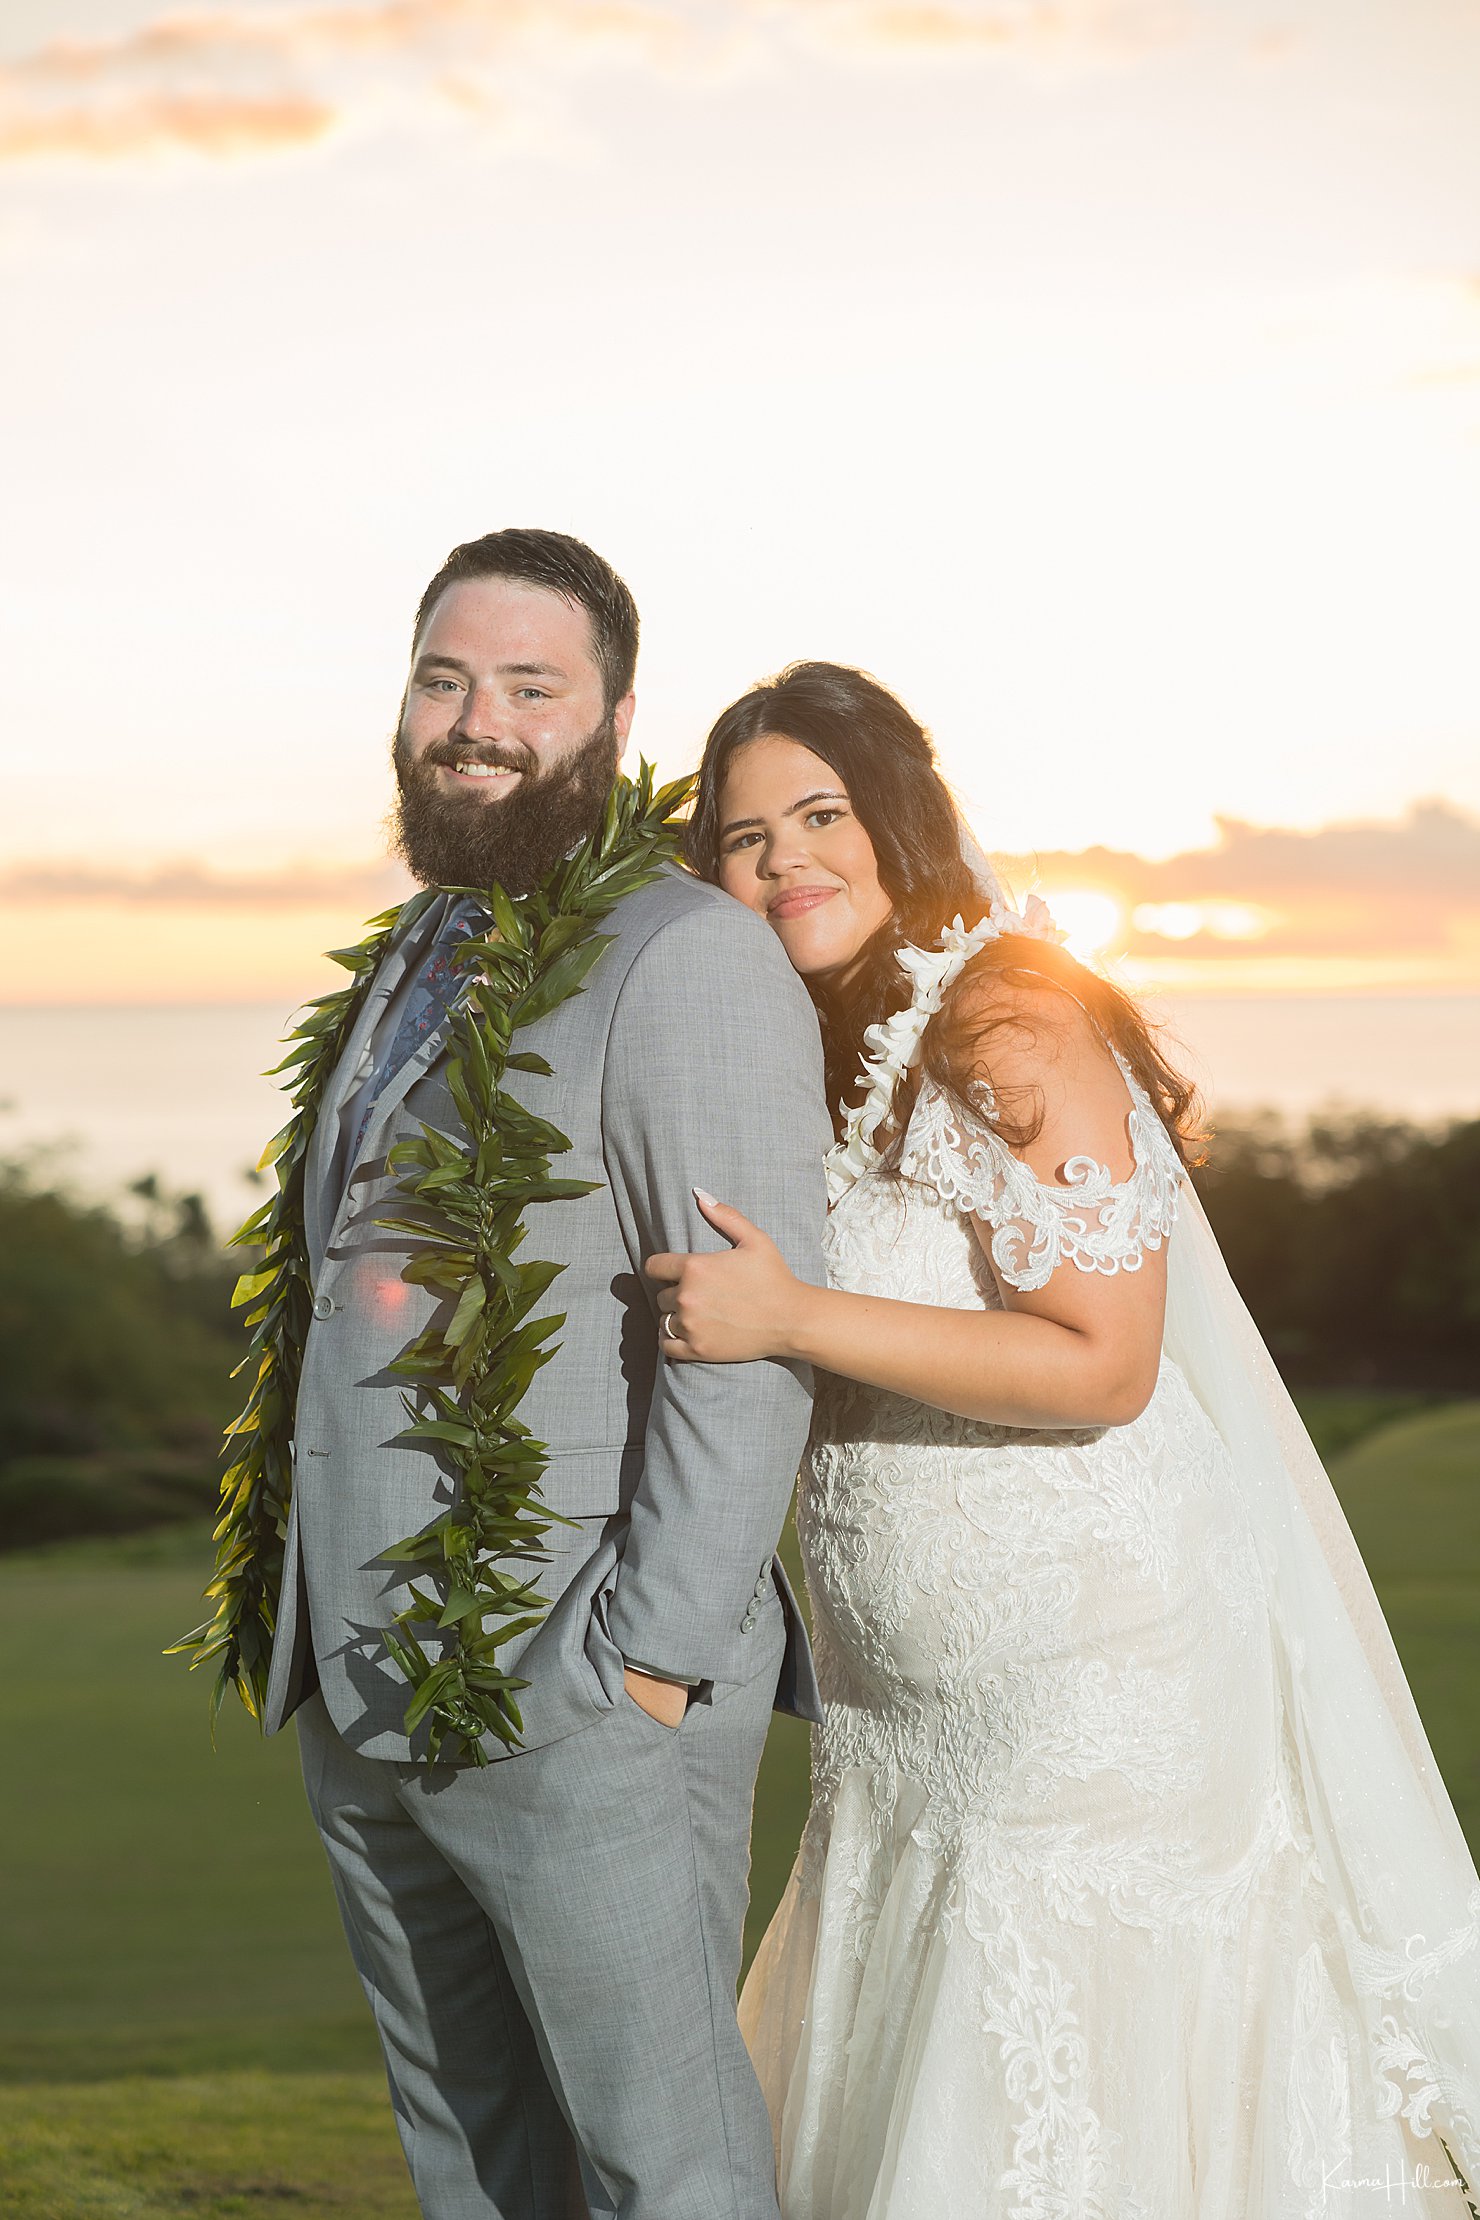 Hawaii Destination Wedding at sunset